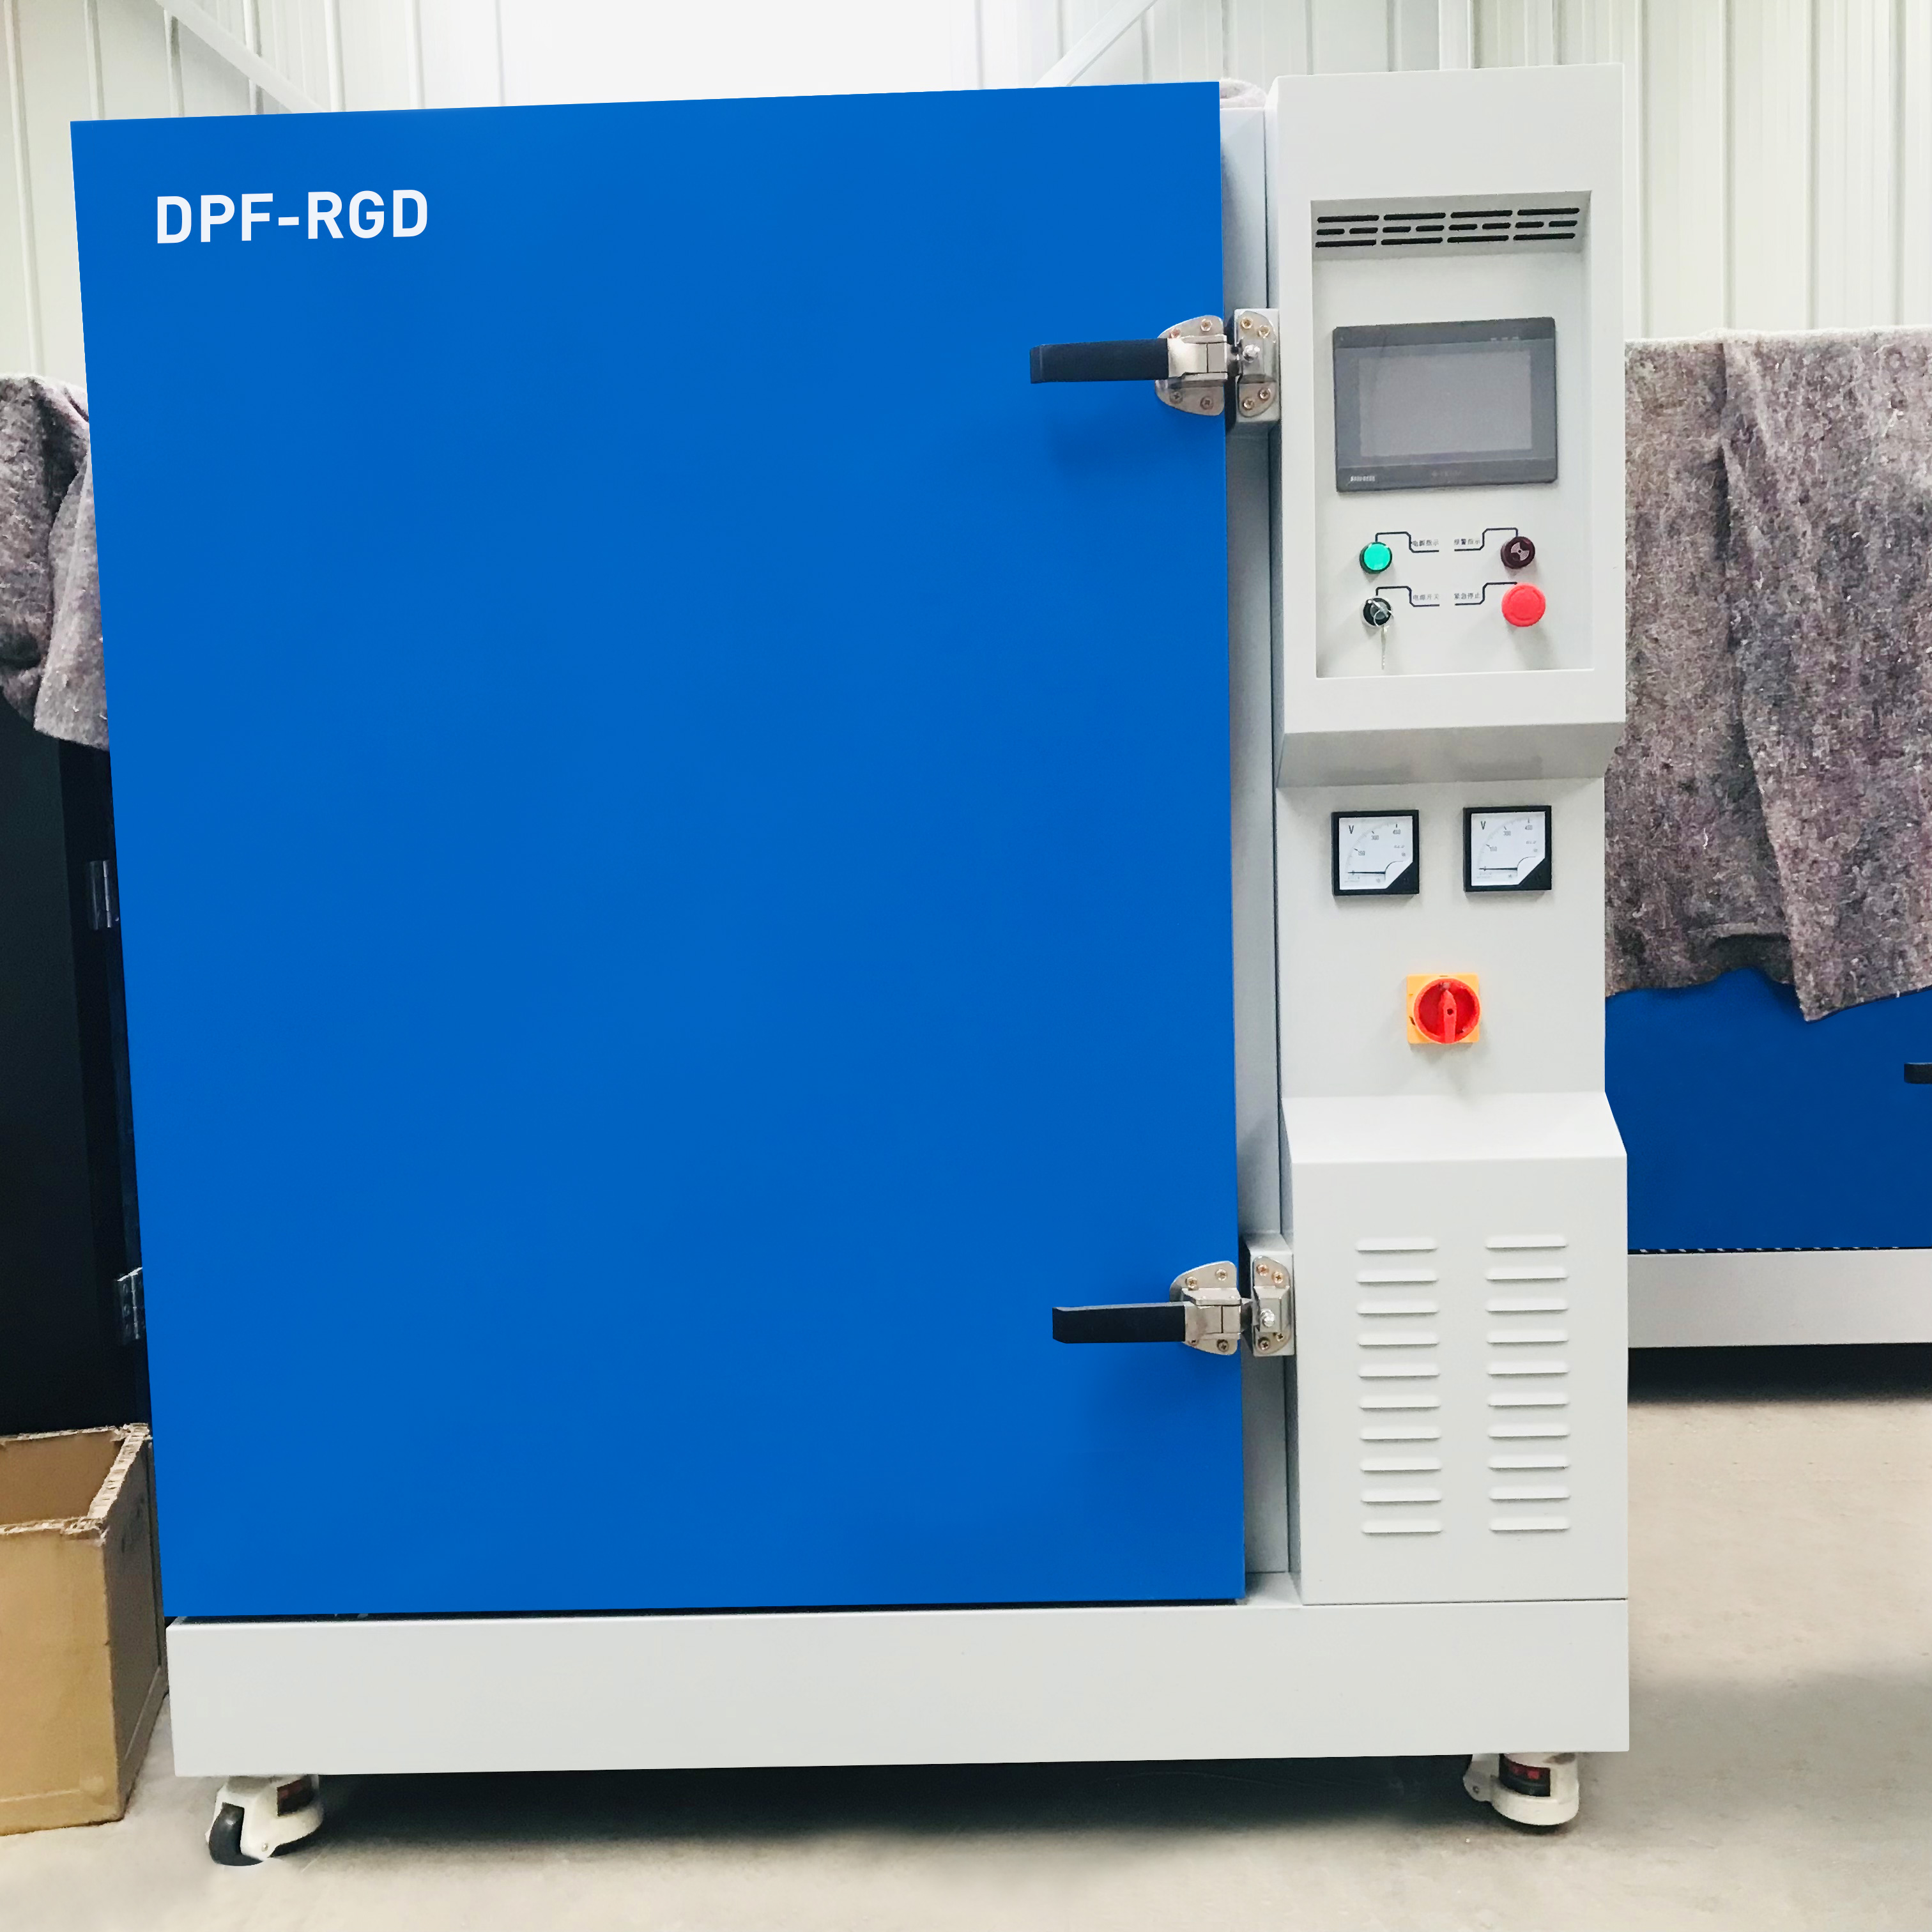 DPF-RGD Post-processing intelligent high-temperature regeneration equipment